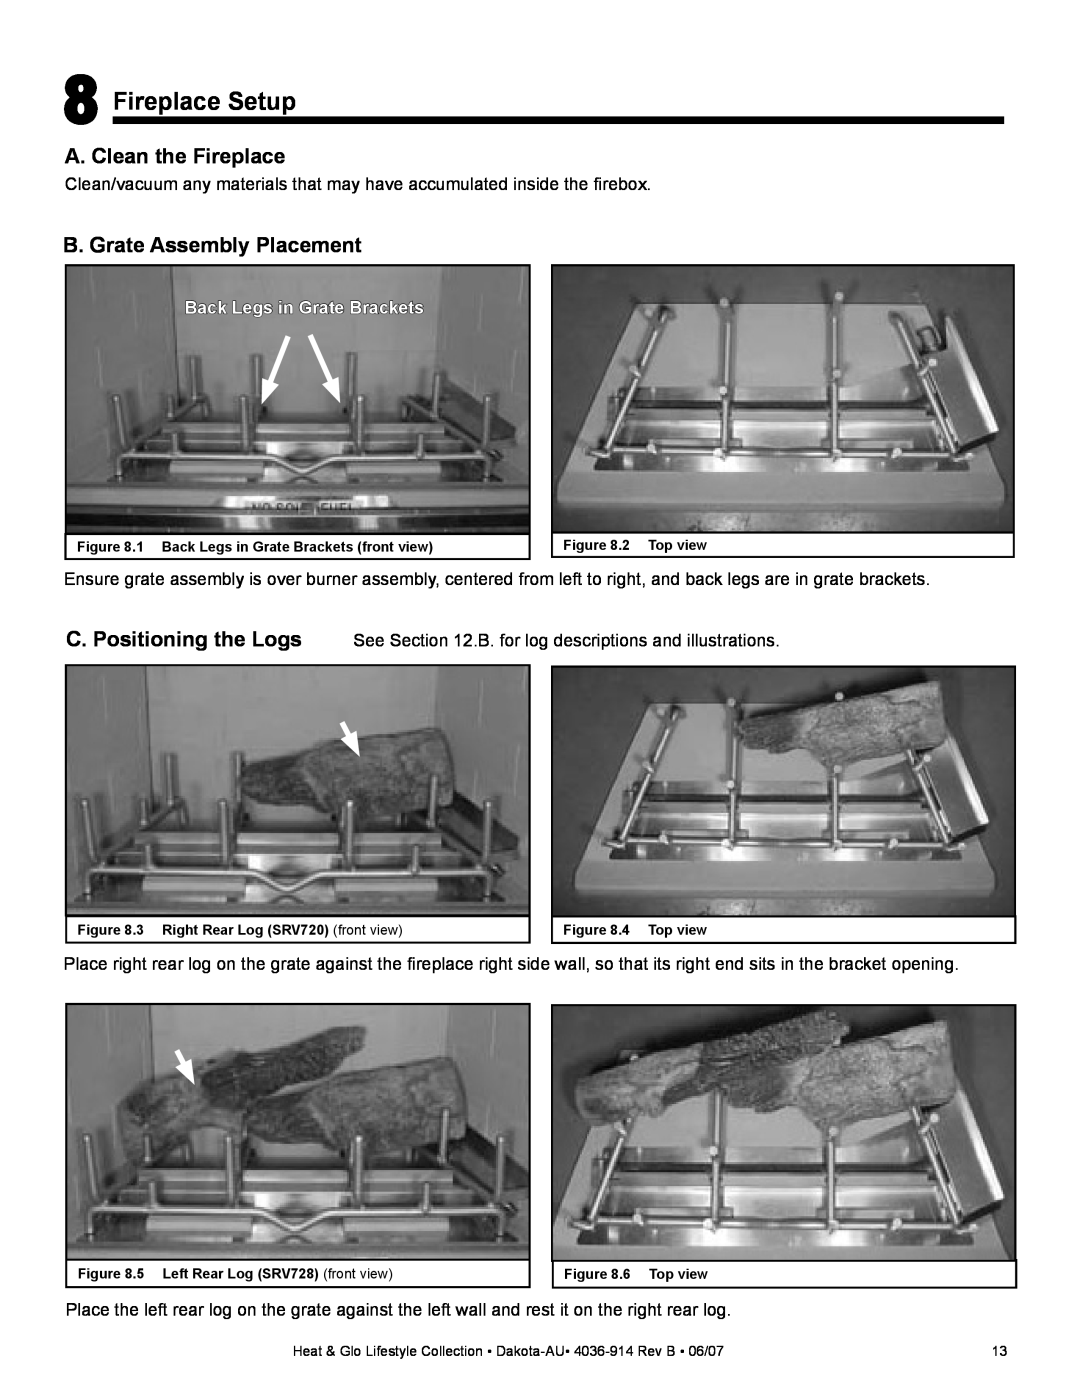 Heat & Glo LifeStyle DAKOTA-AU manual Fireplace Setup, A. Clean the Fireplace, B. Grate Assembly Placement 